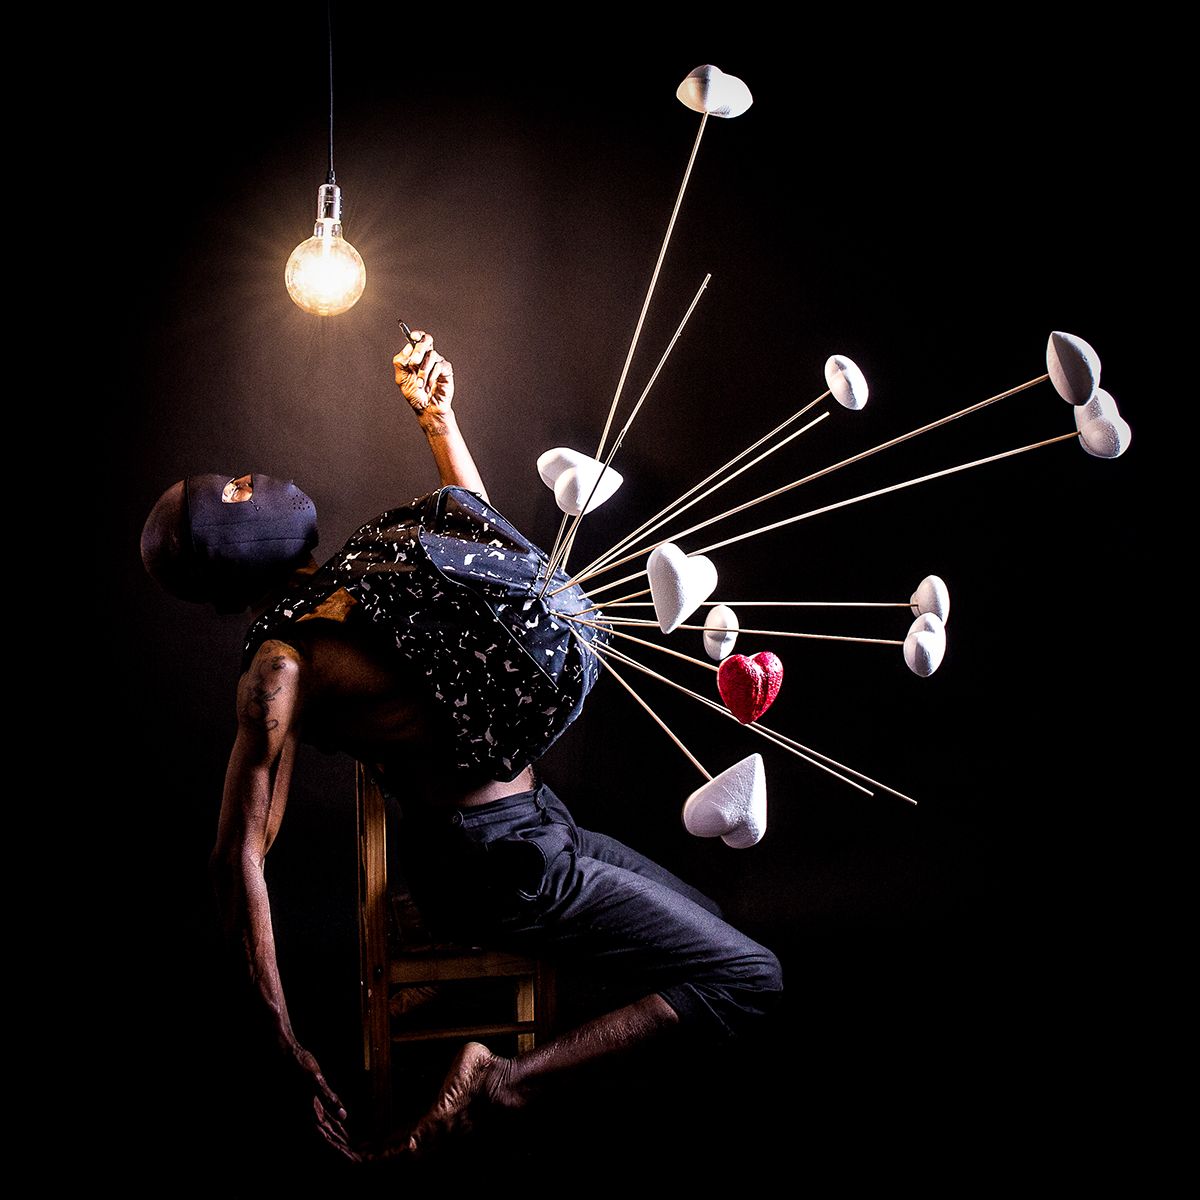 #choreophotolist dancer Directer Performance Stories Blackman manchester contact UK